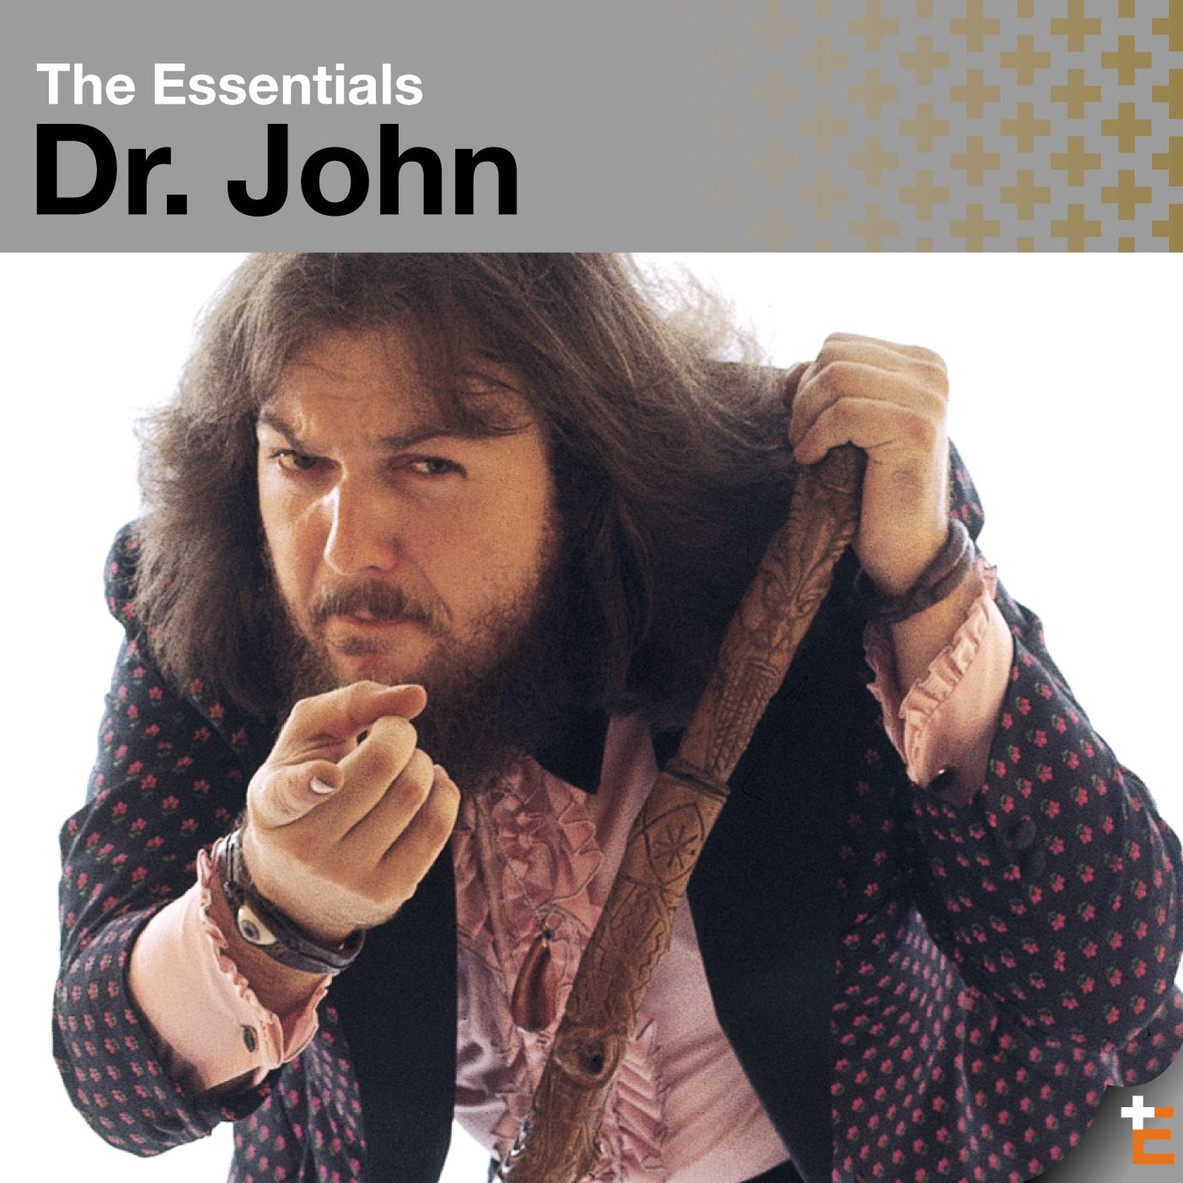 The Essentials: Dr. John